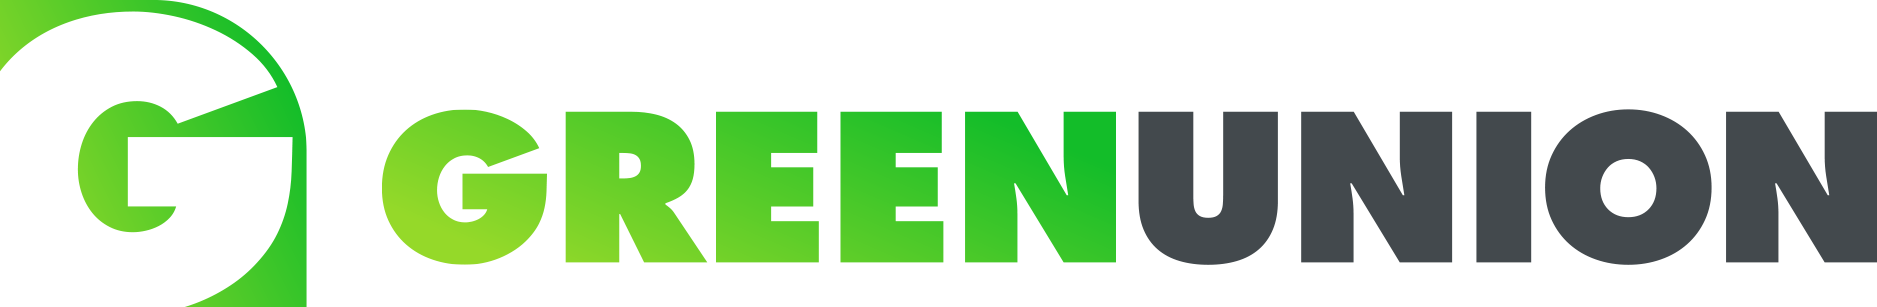 Green Union